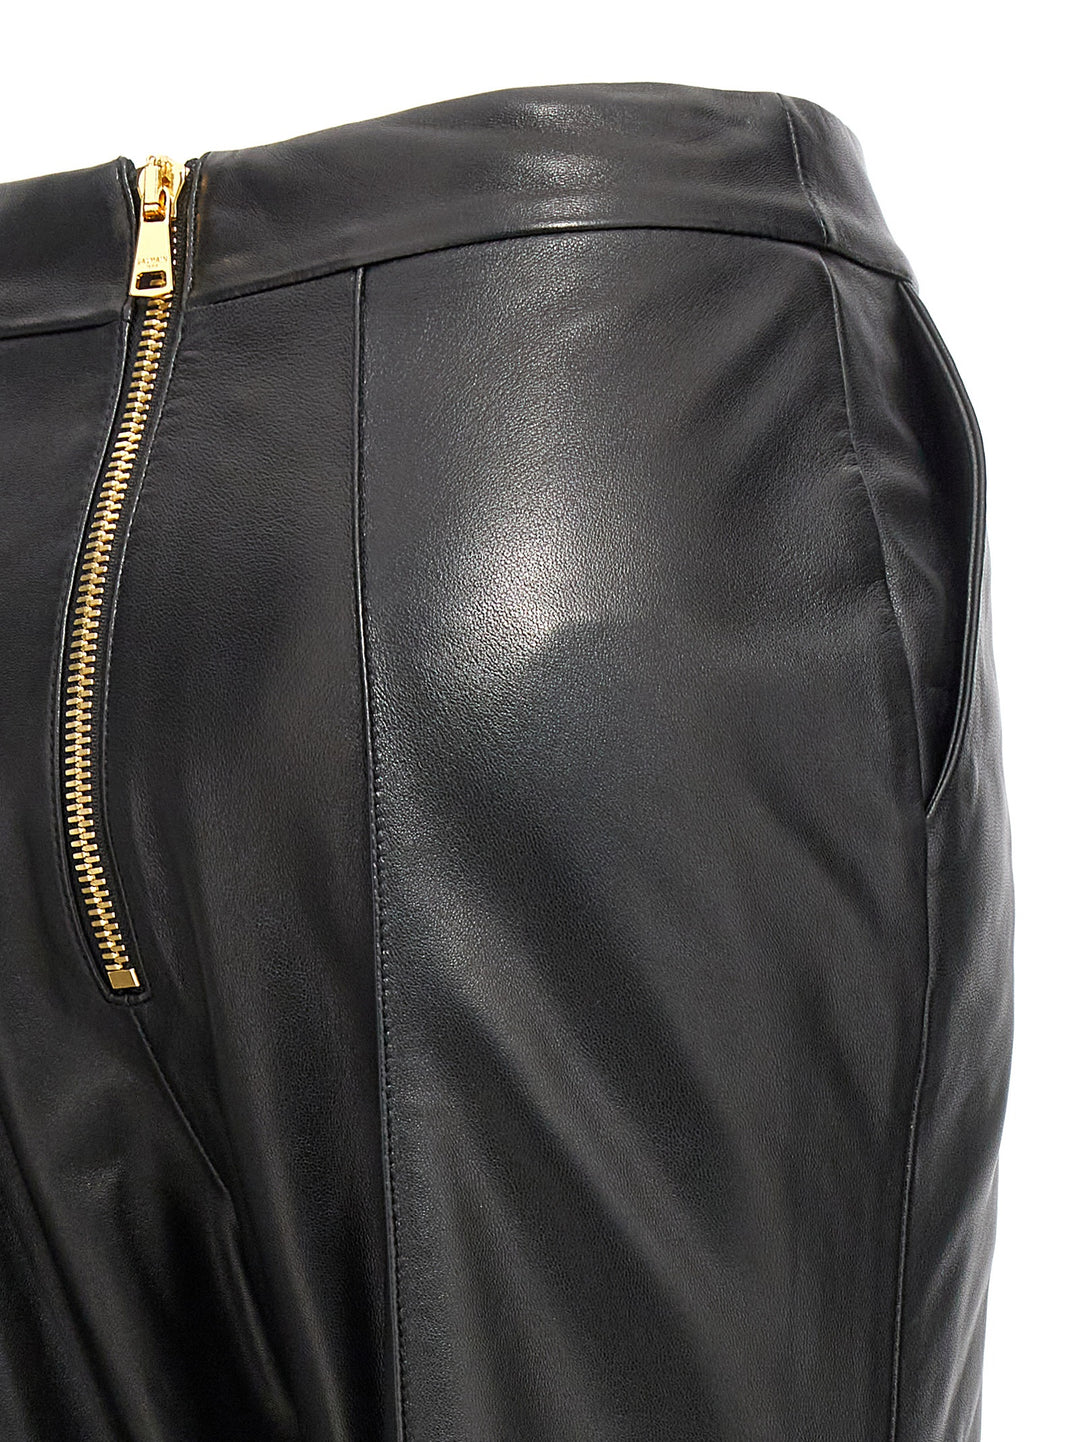 Leather Pantaloni Nero